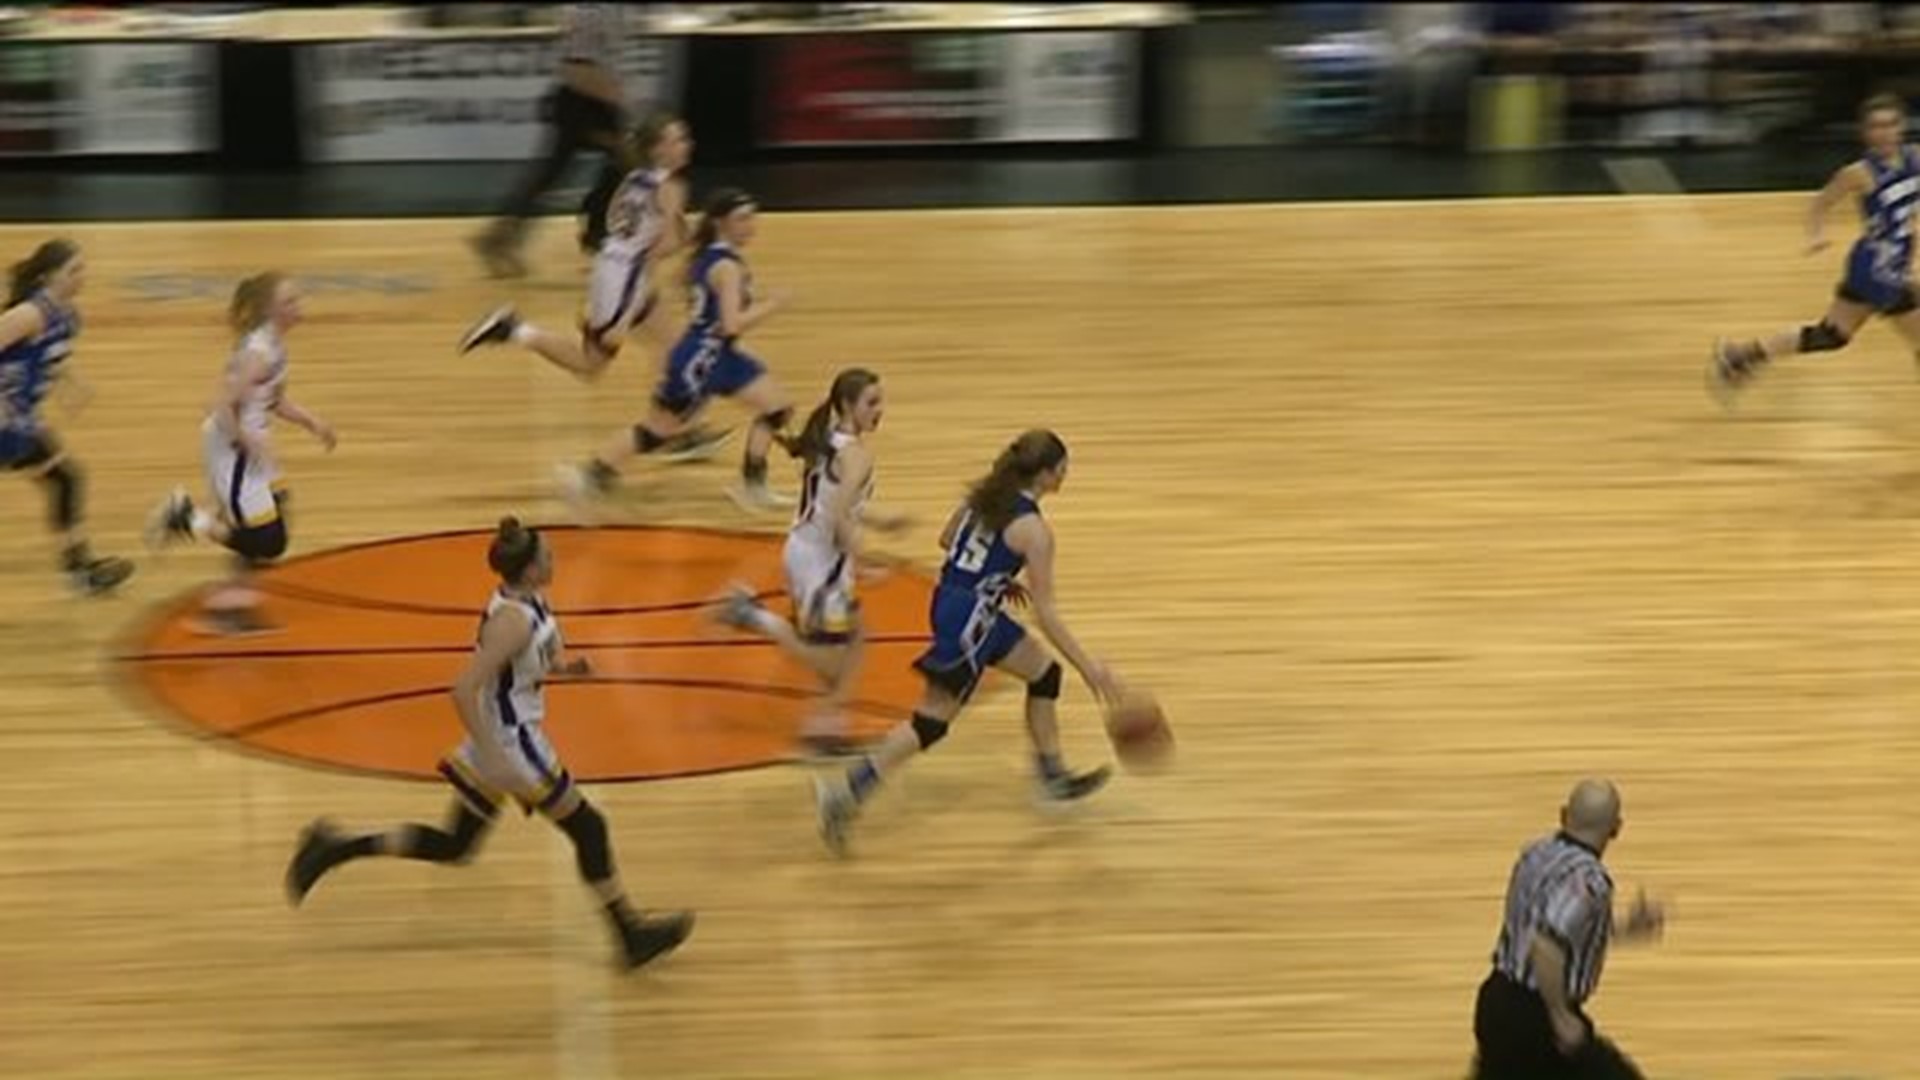 Susquehanna Community Girls Basketball Team Forced to Travel